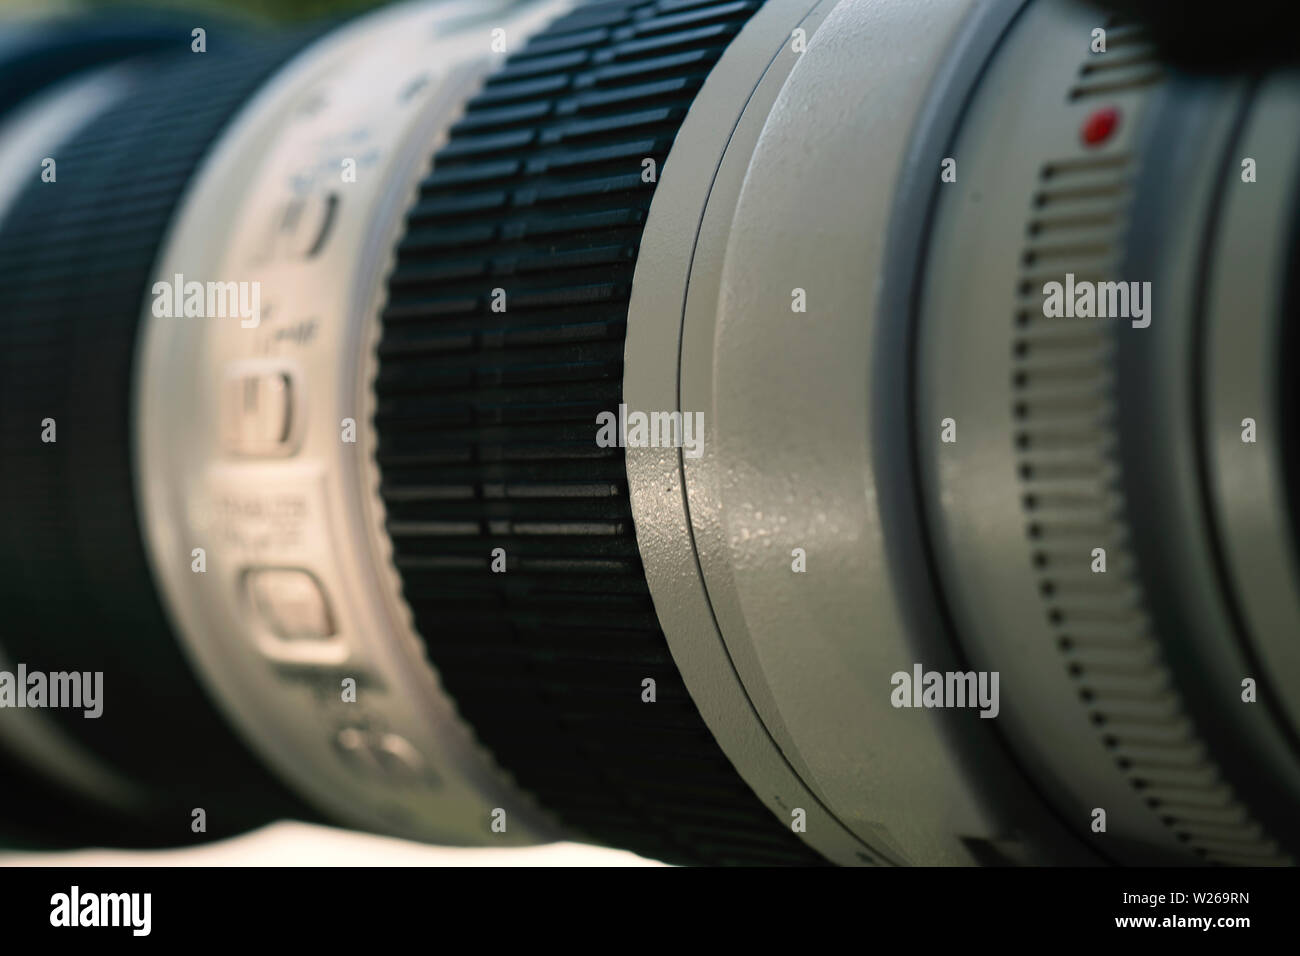 Camera lens on light background Stock Photo